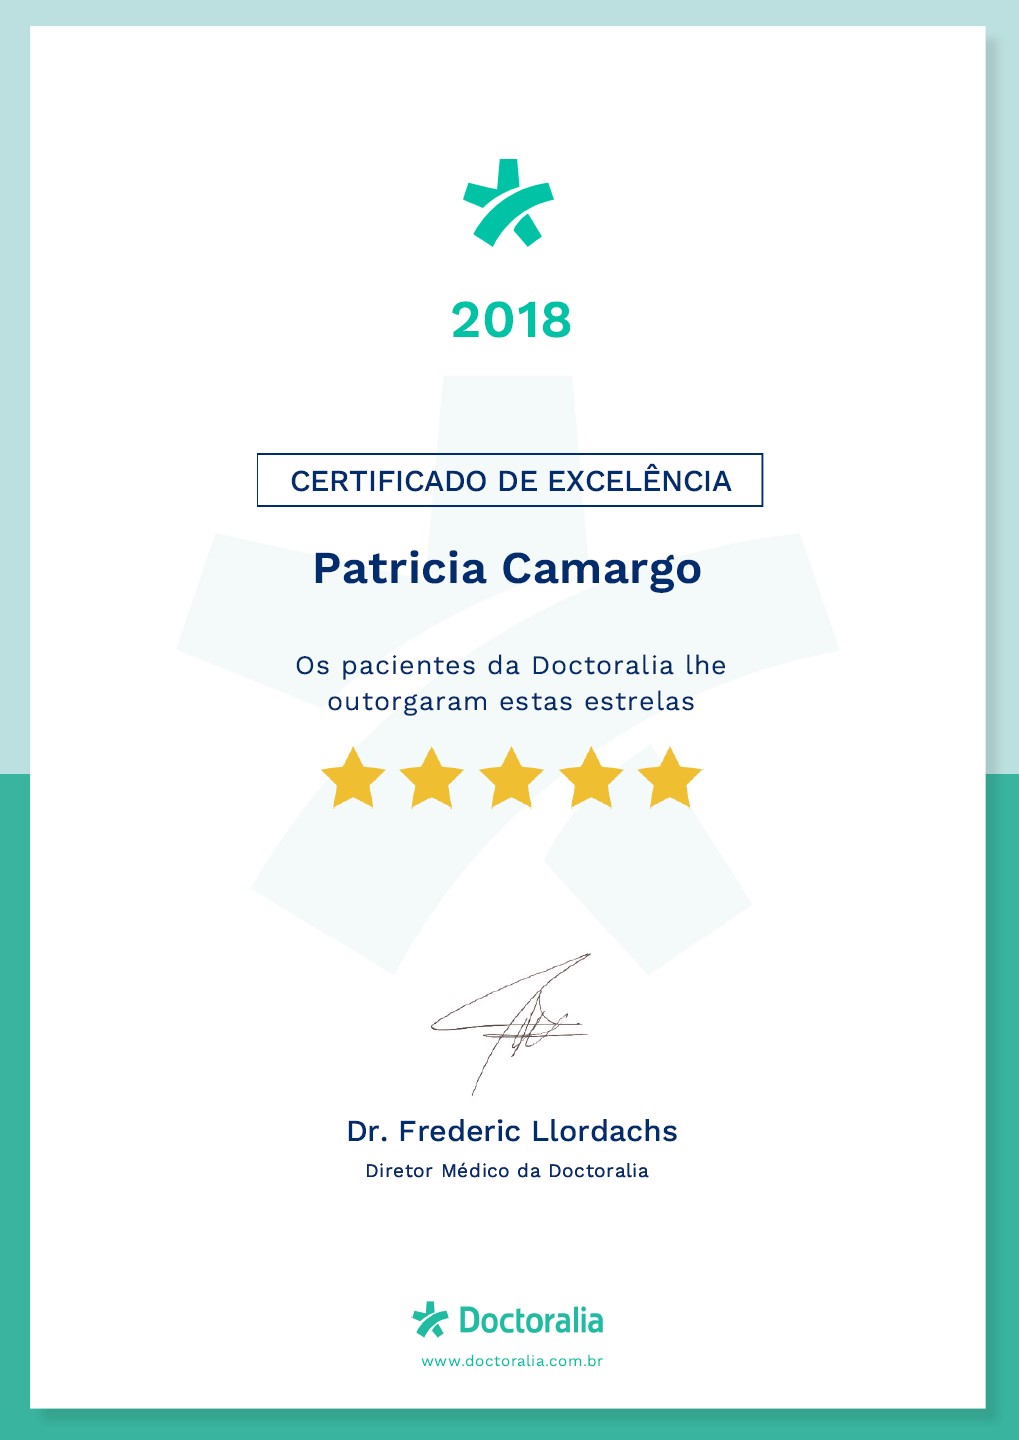 Certificado de Excelência Doctoralia 2018